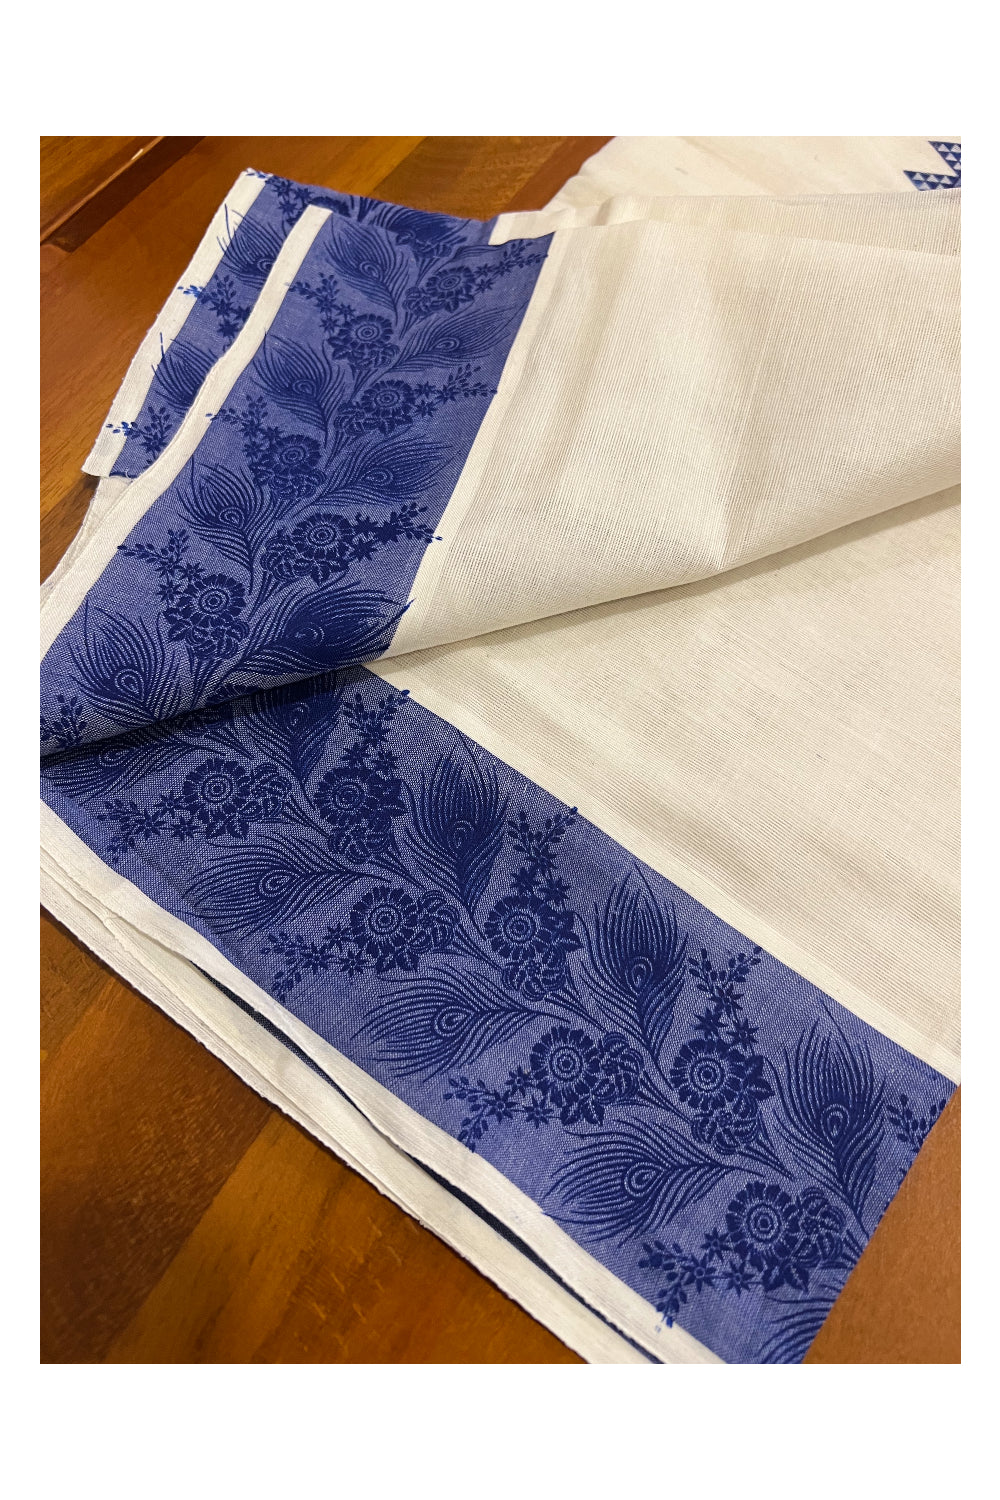 Kerala Cotton Set Mundu (Mundum Neriyathum) with Blue Feather Floral Temple Block Prints on Border